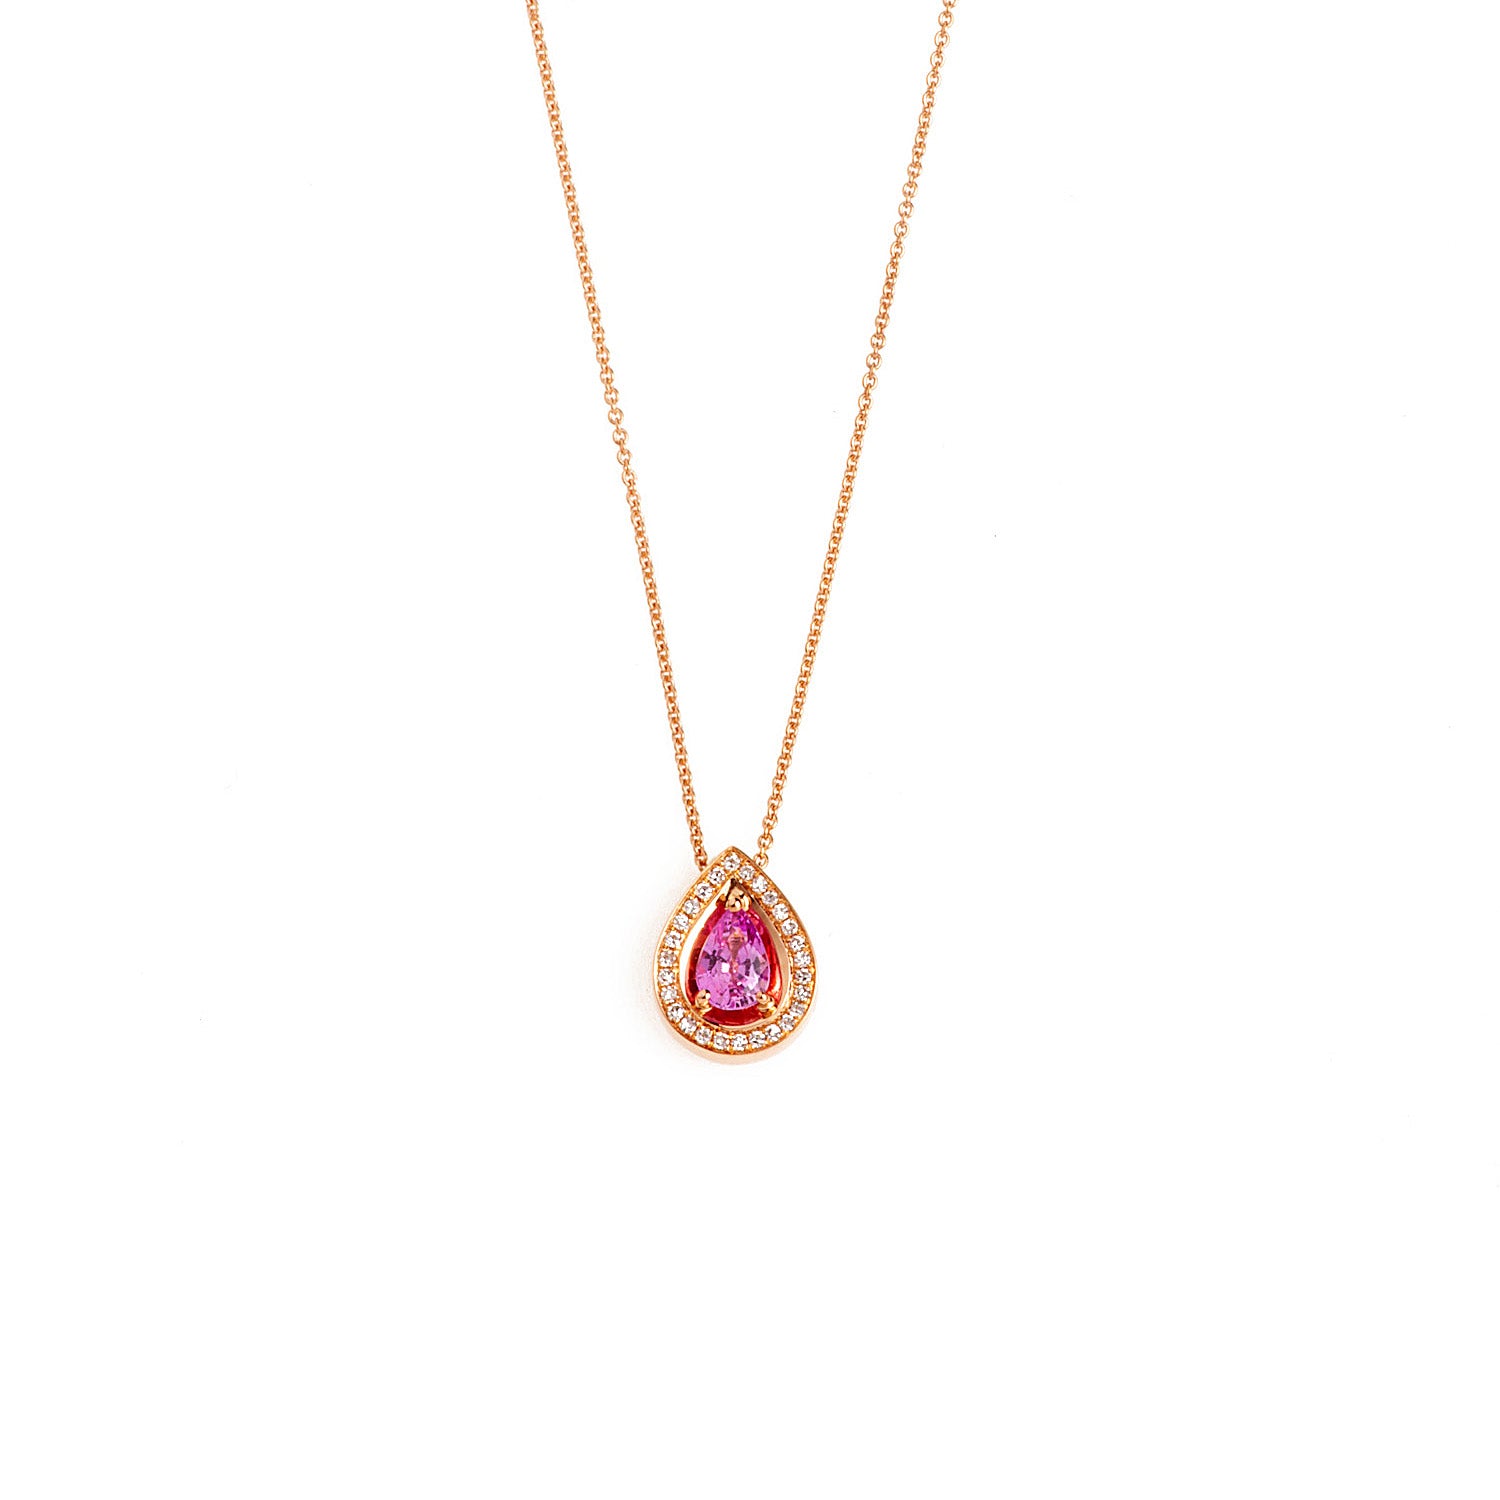 Pink sapphire and diamond necklace. Κολιέ με μπριγιάν και ζαφείρι.